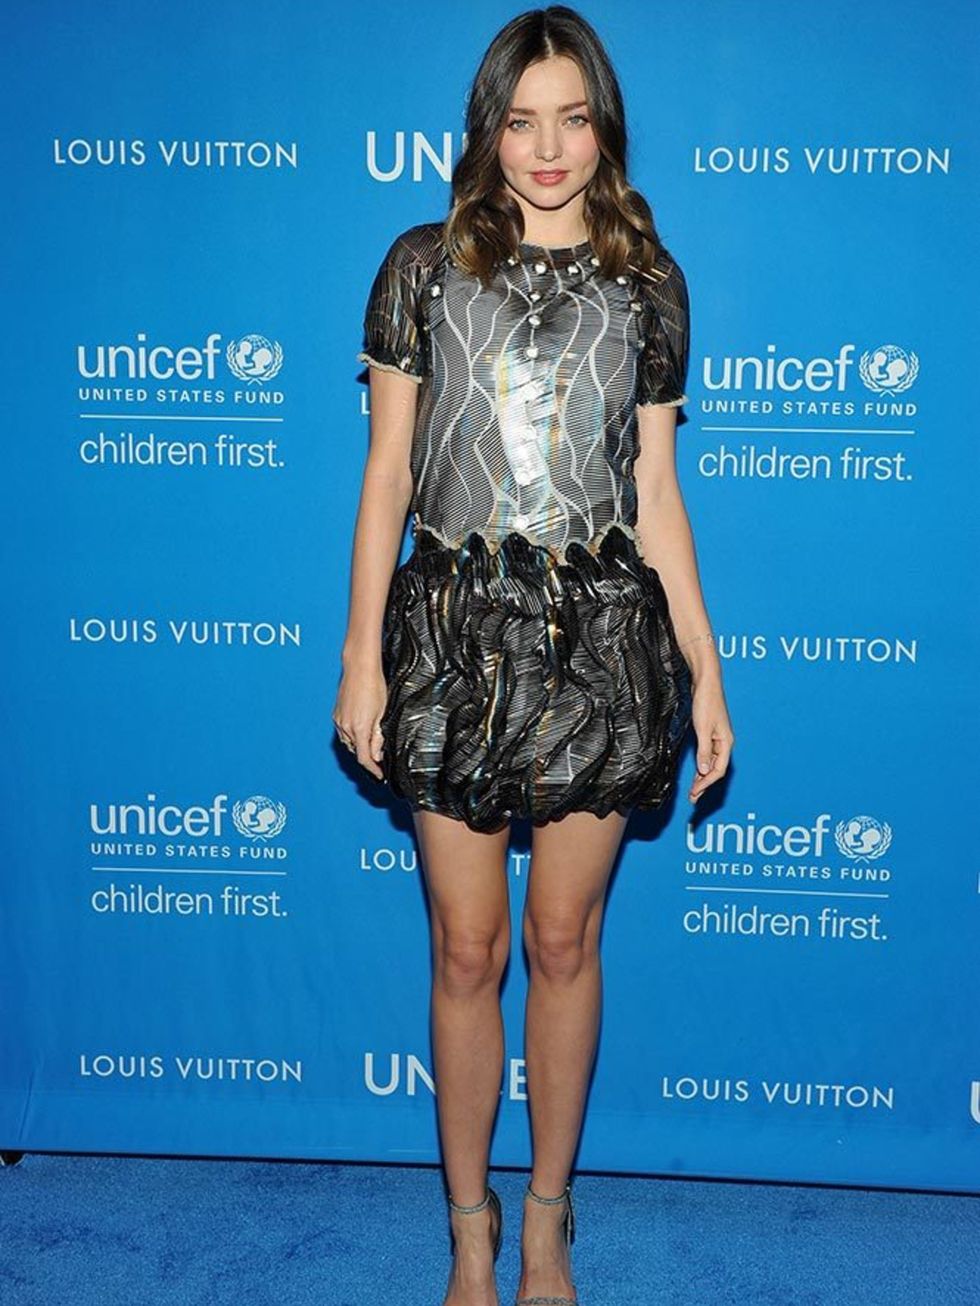 Miranda Kerr wearing Louis Vuitton at the UNICEF Ball Honouring David Beckham and C.L. Max Niklas in Beverly Hills, January 2016